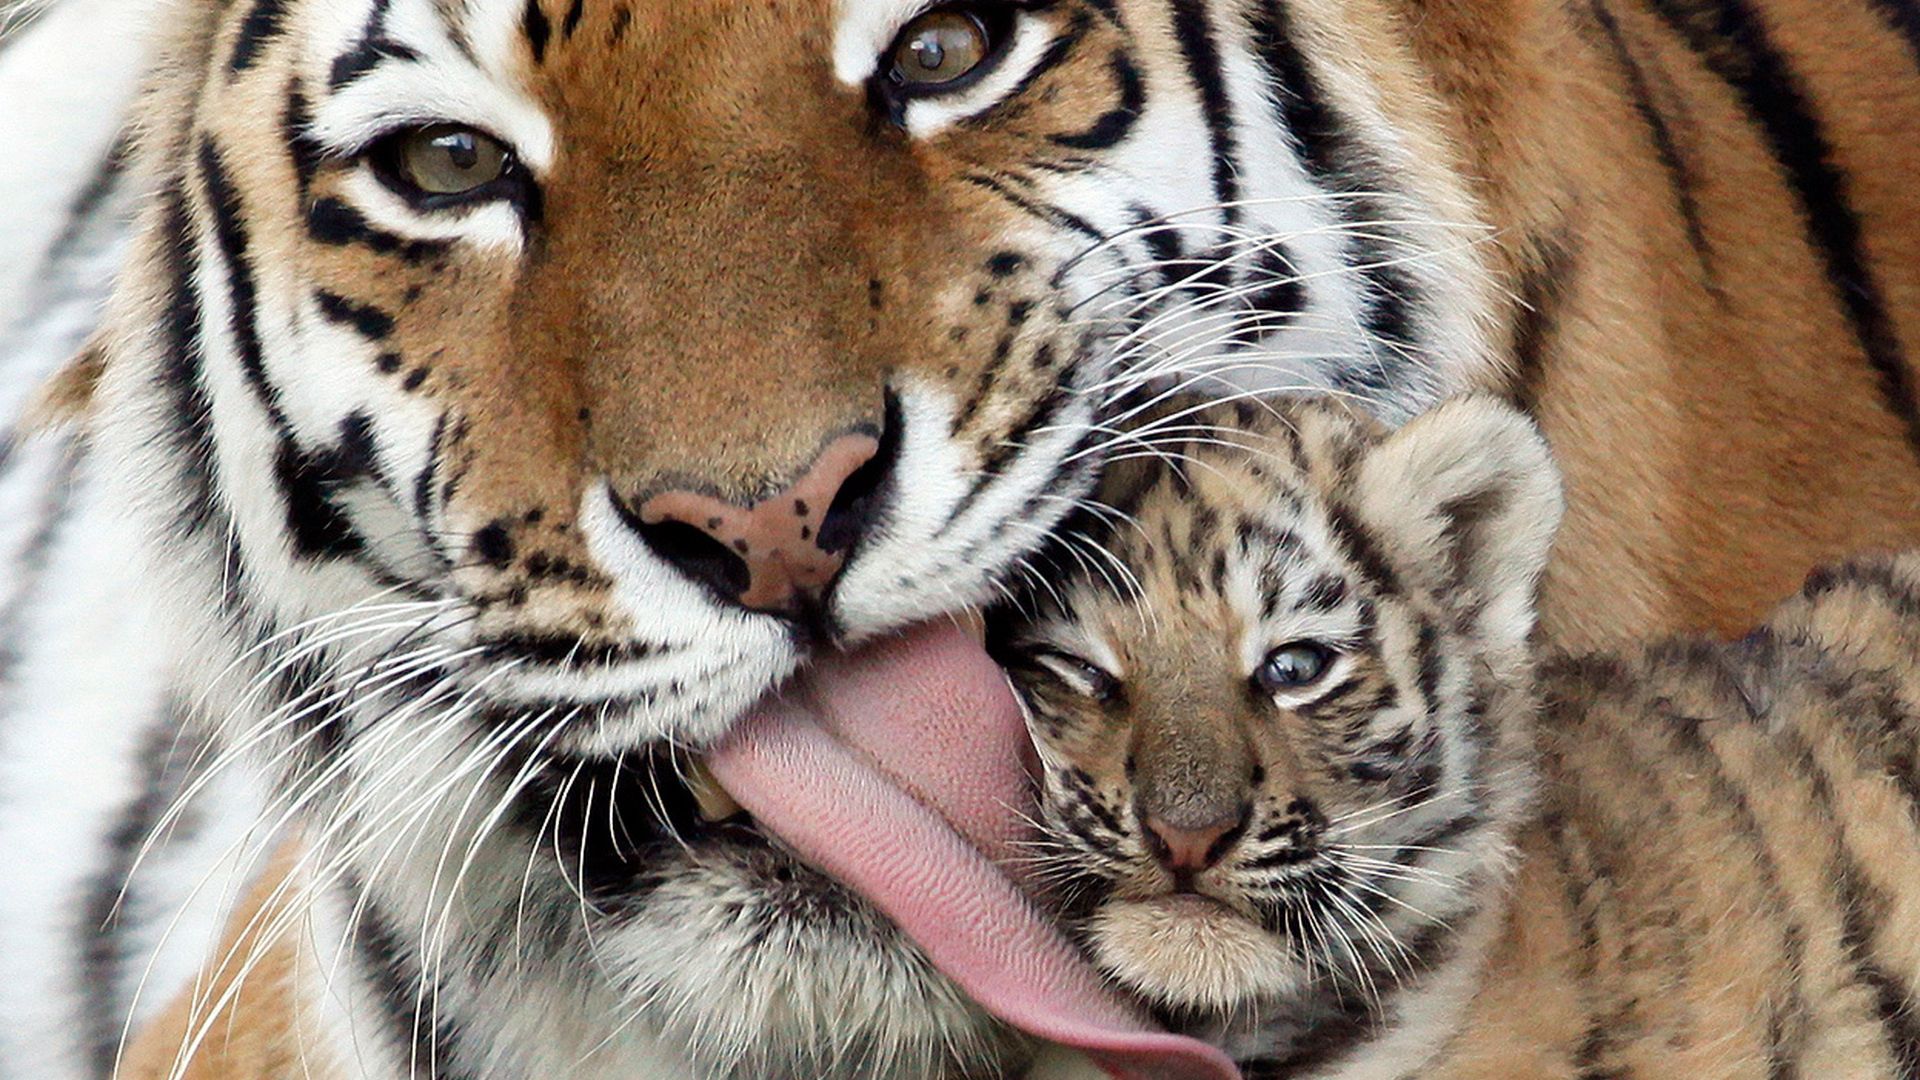 tiger cub, tiger, animals, care, language, tongue, weasel